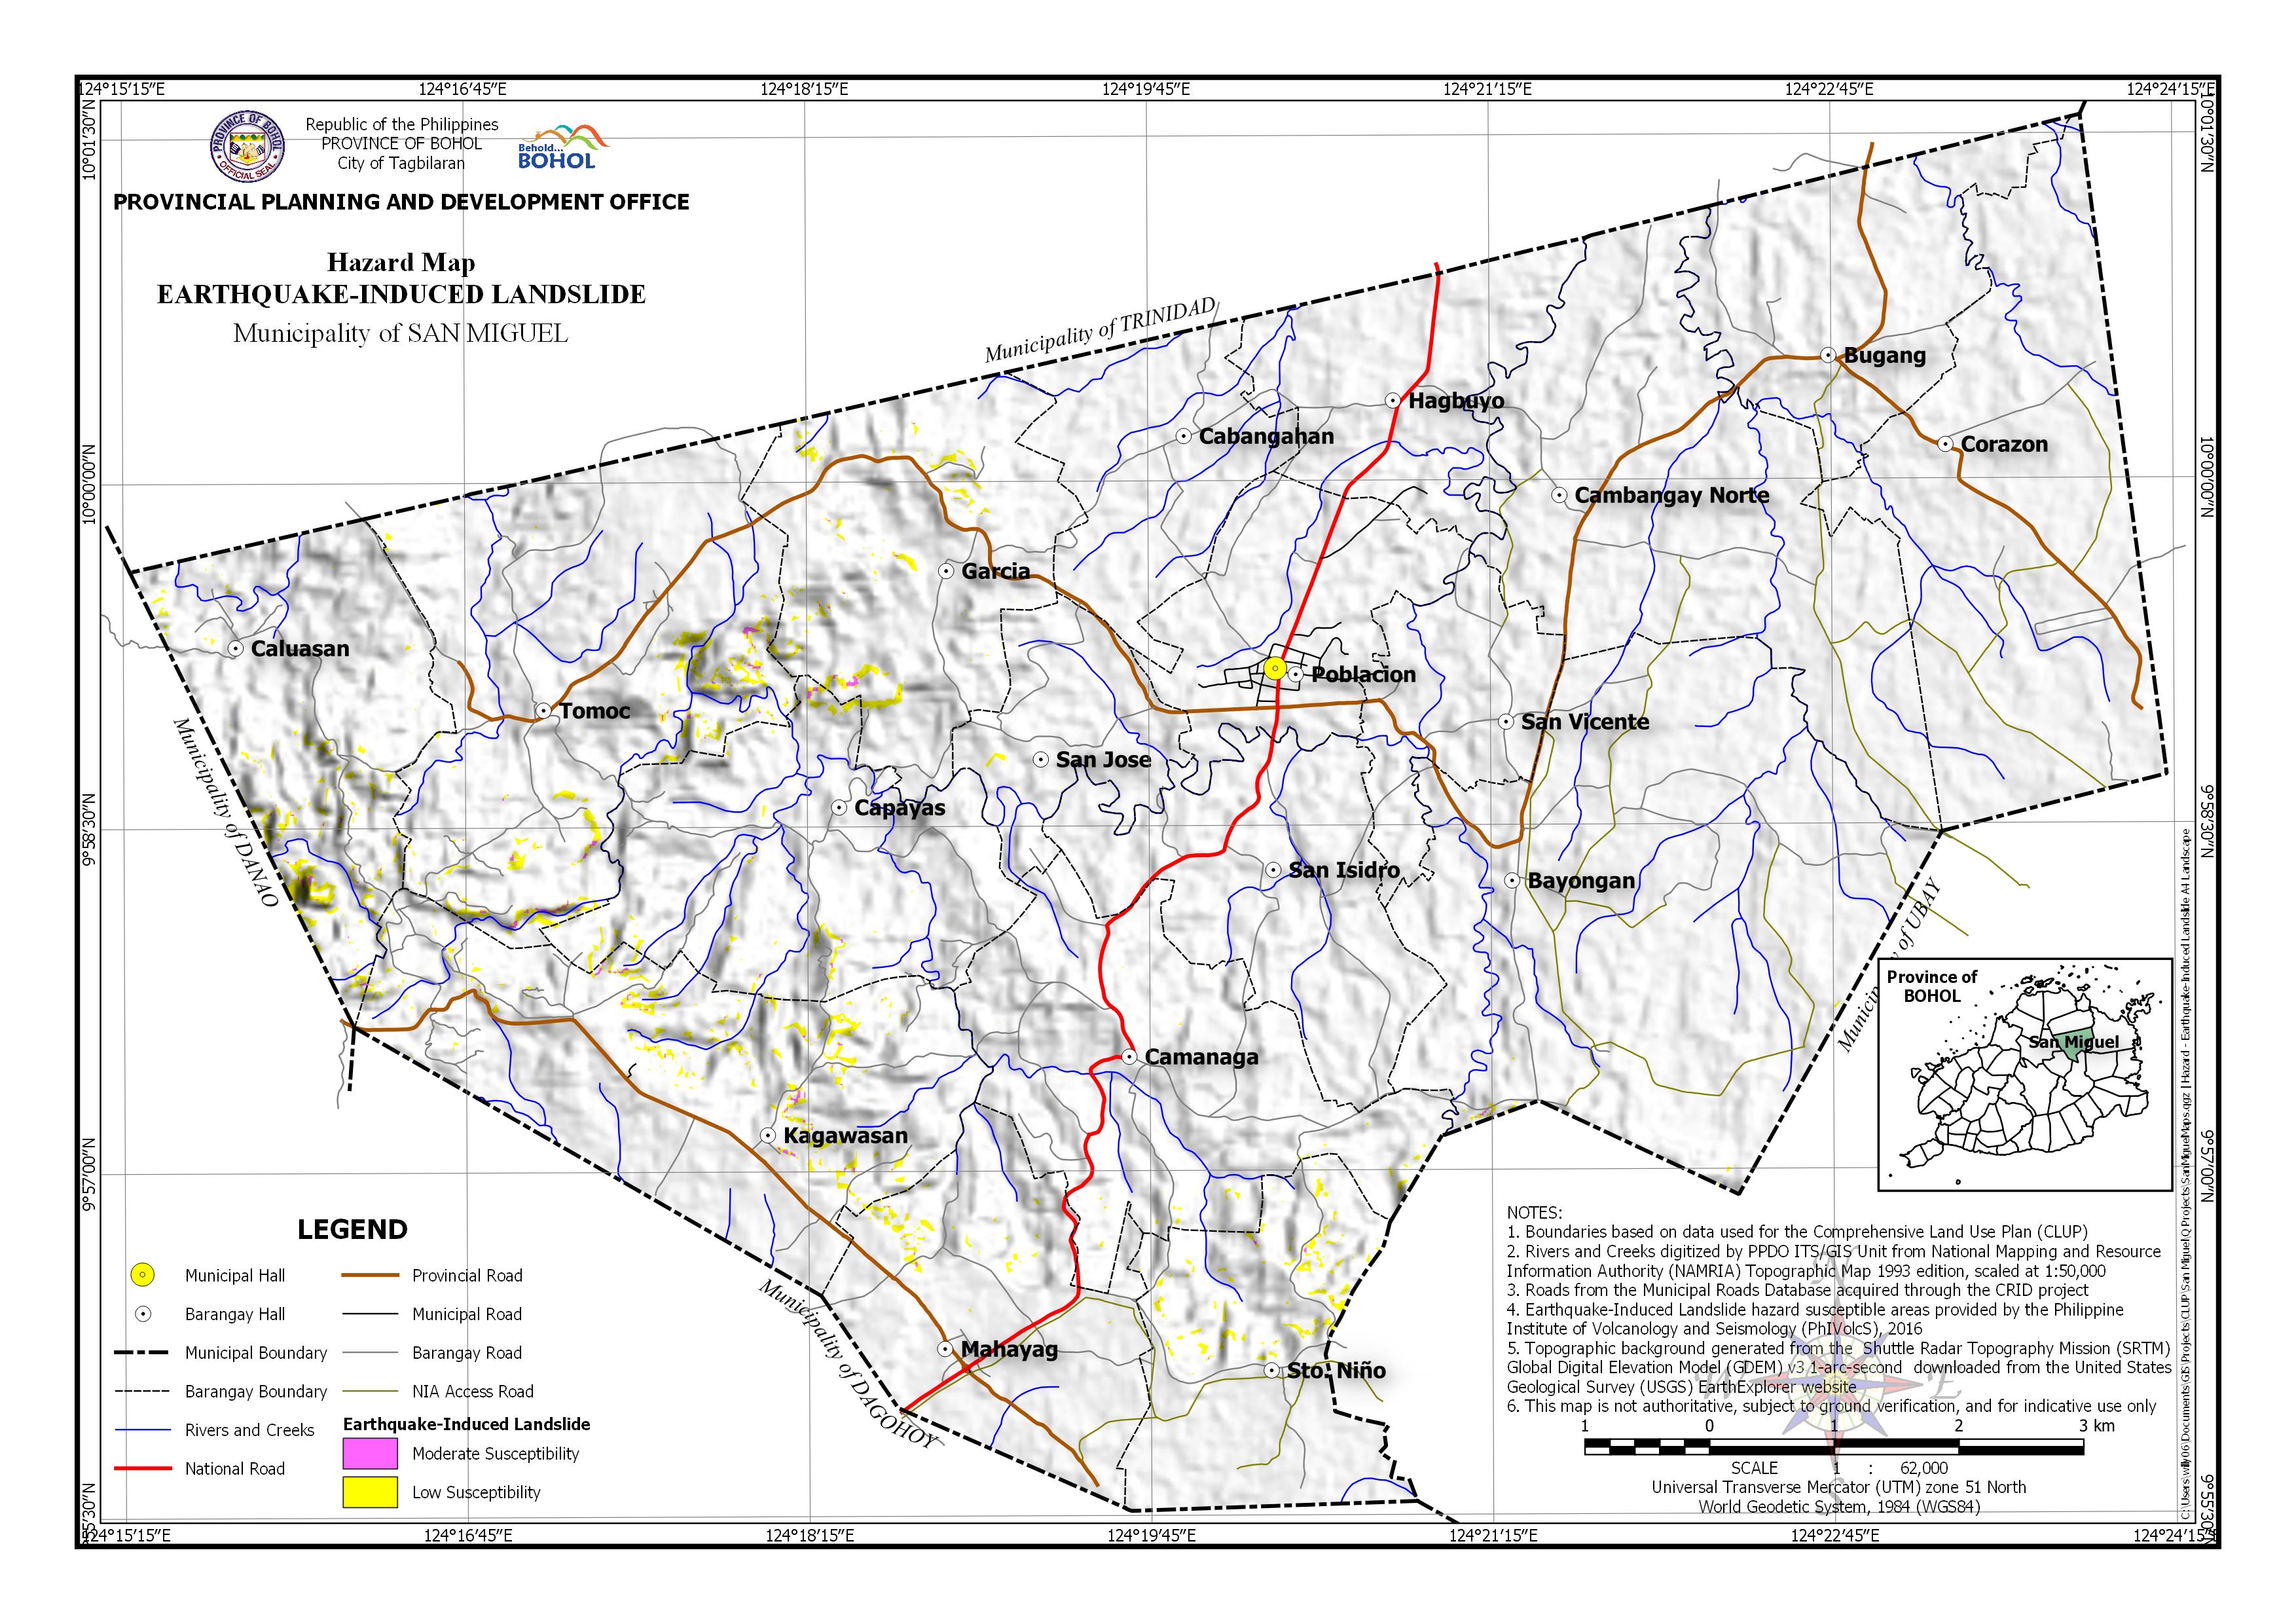 Earthquake-Induced Landslide Map of San Miguel 